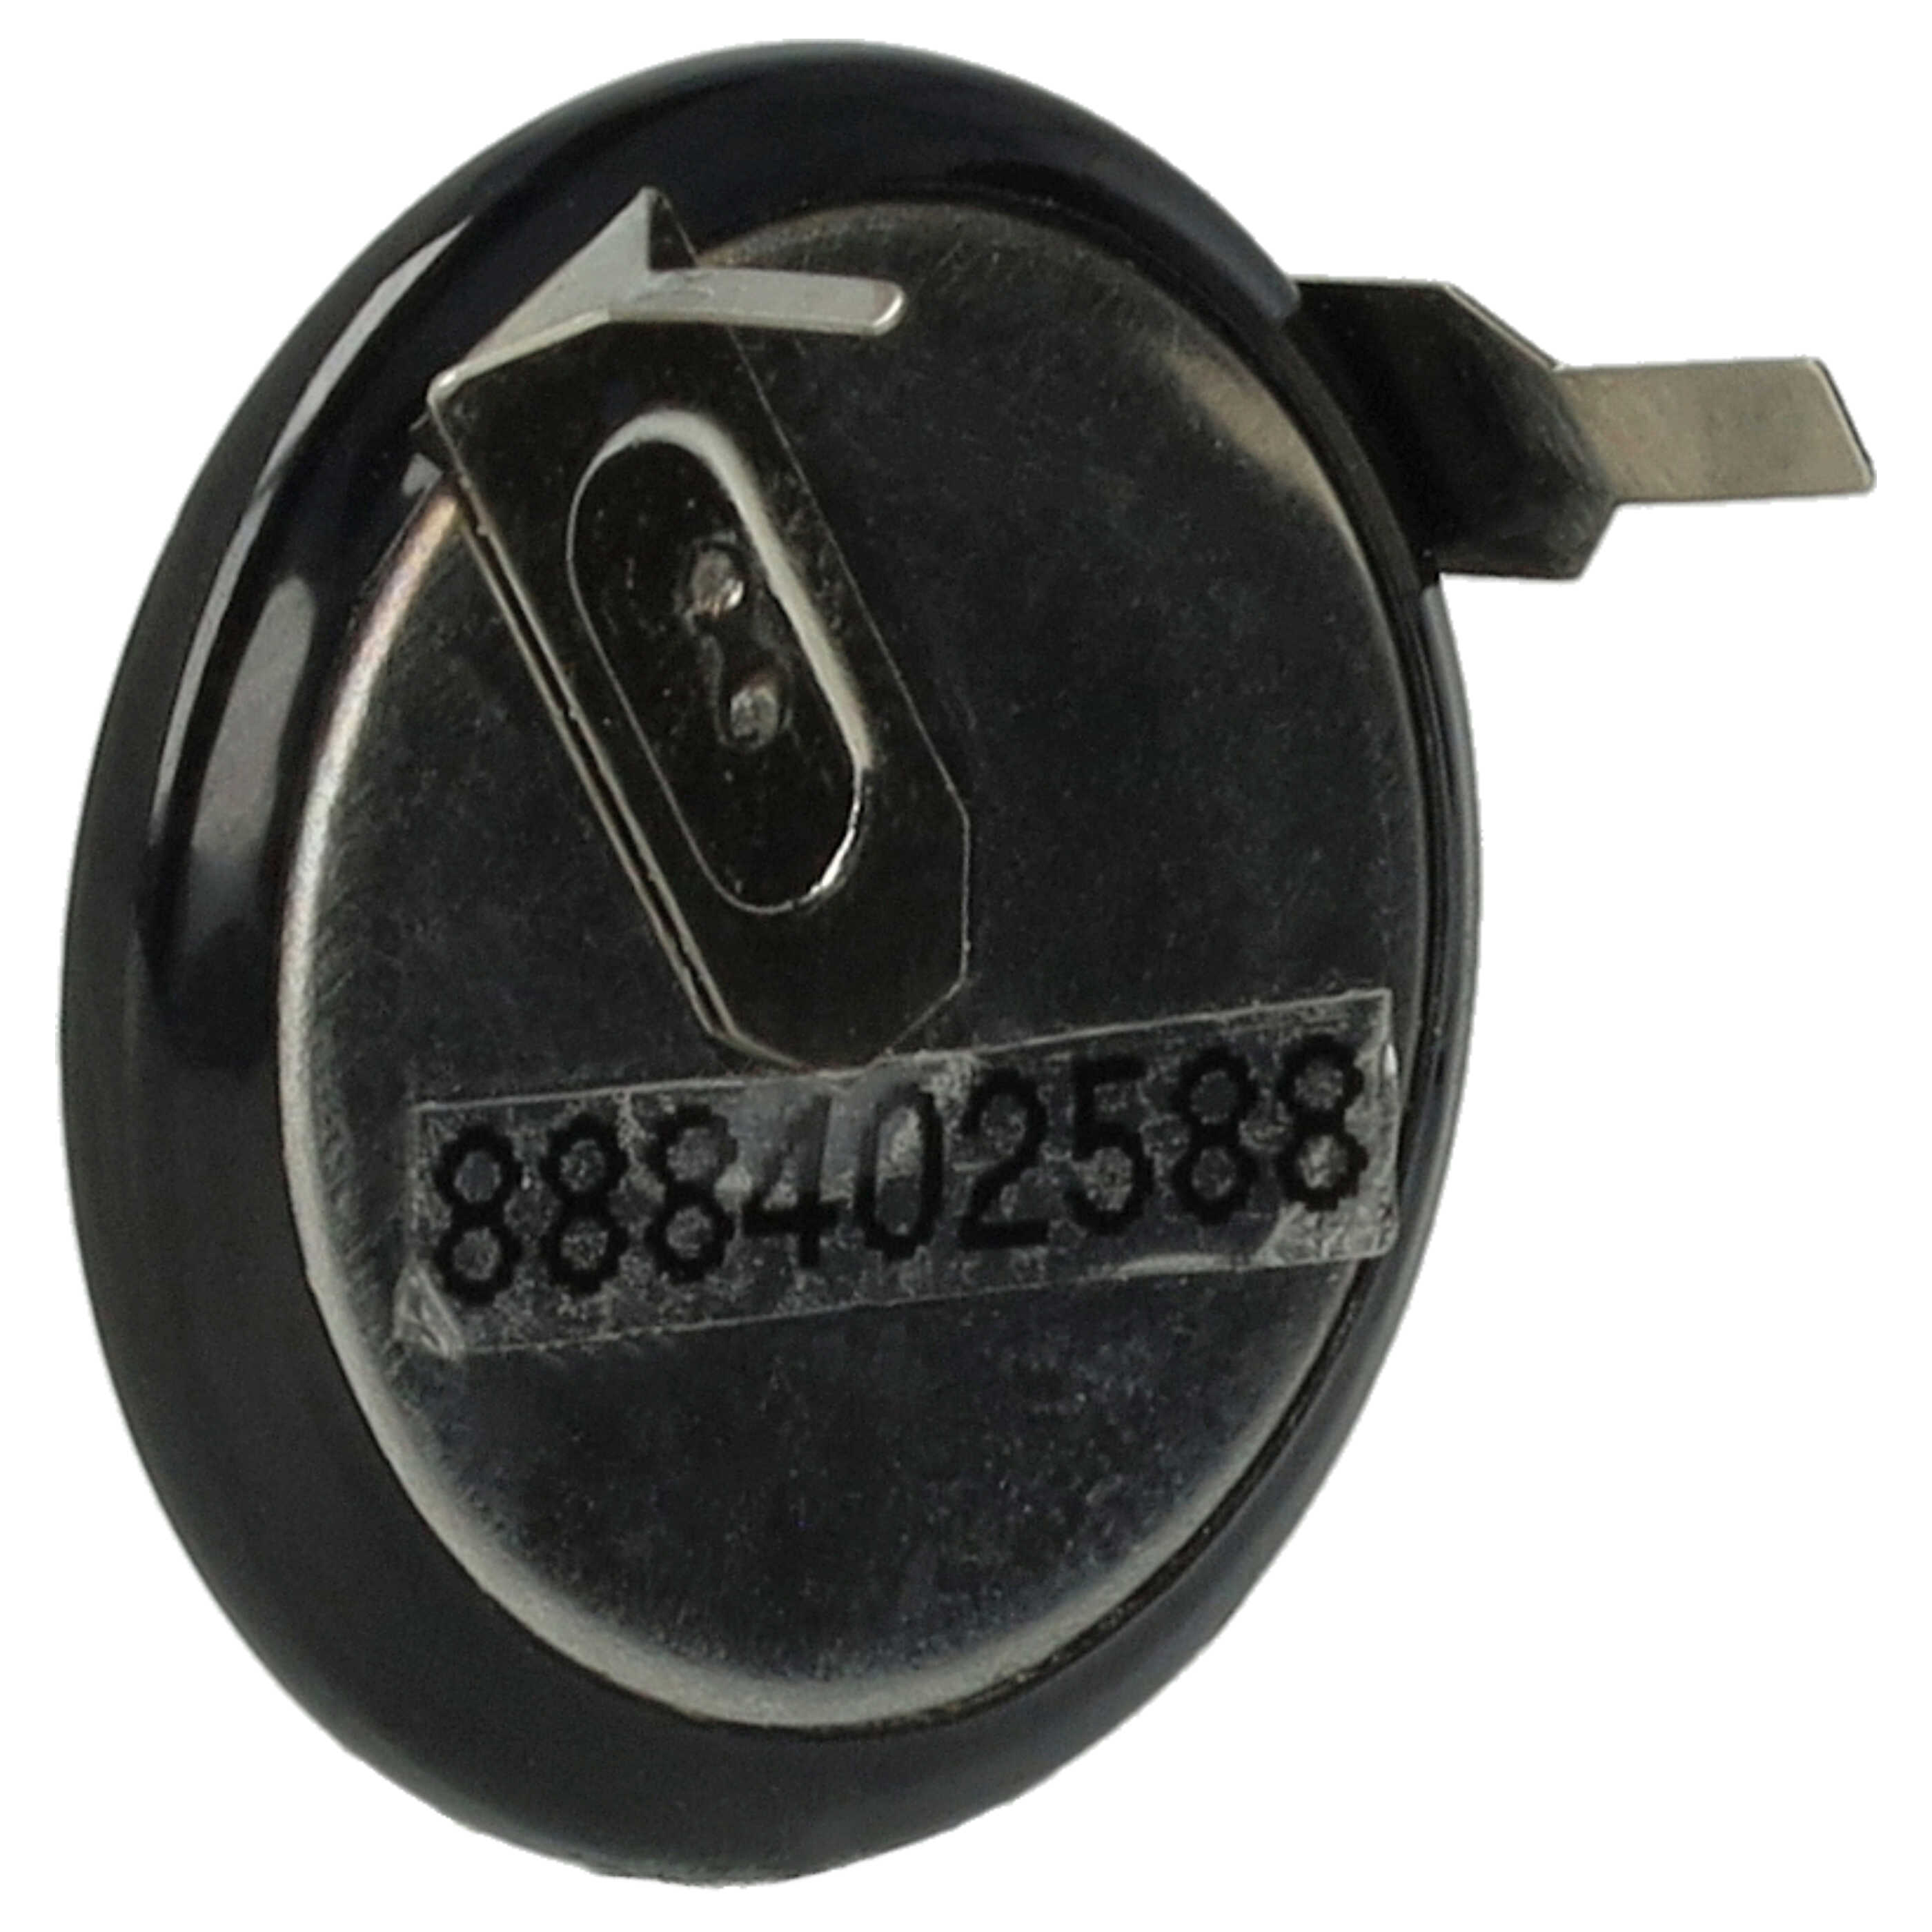 Akumulator do kluczyka samochodowego zamiennik VL2020, VL2025, LIR2025 - 20 mAh 3,6 V Li-Ion